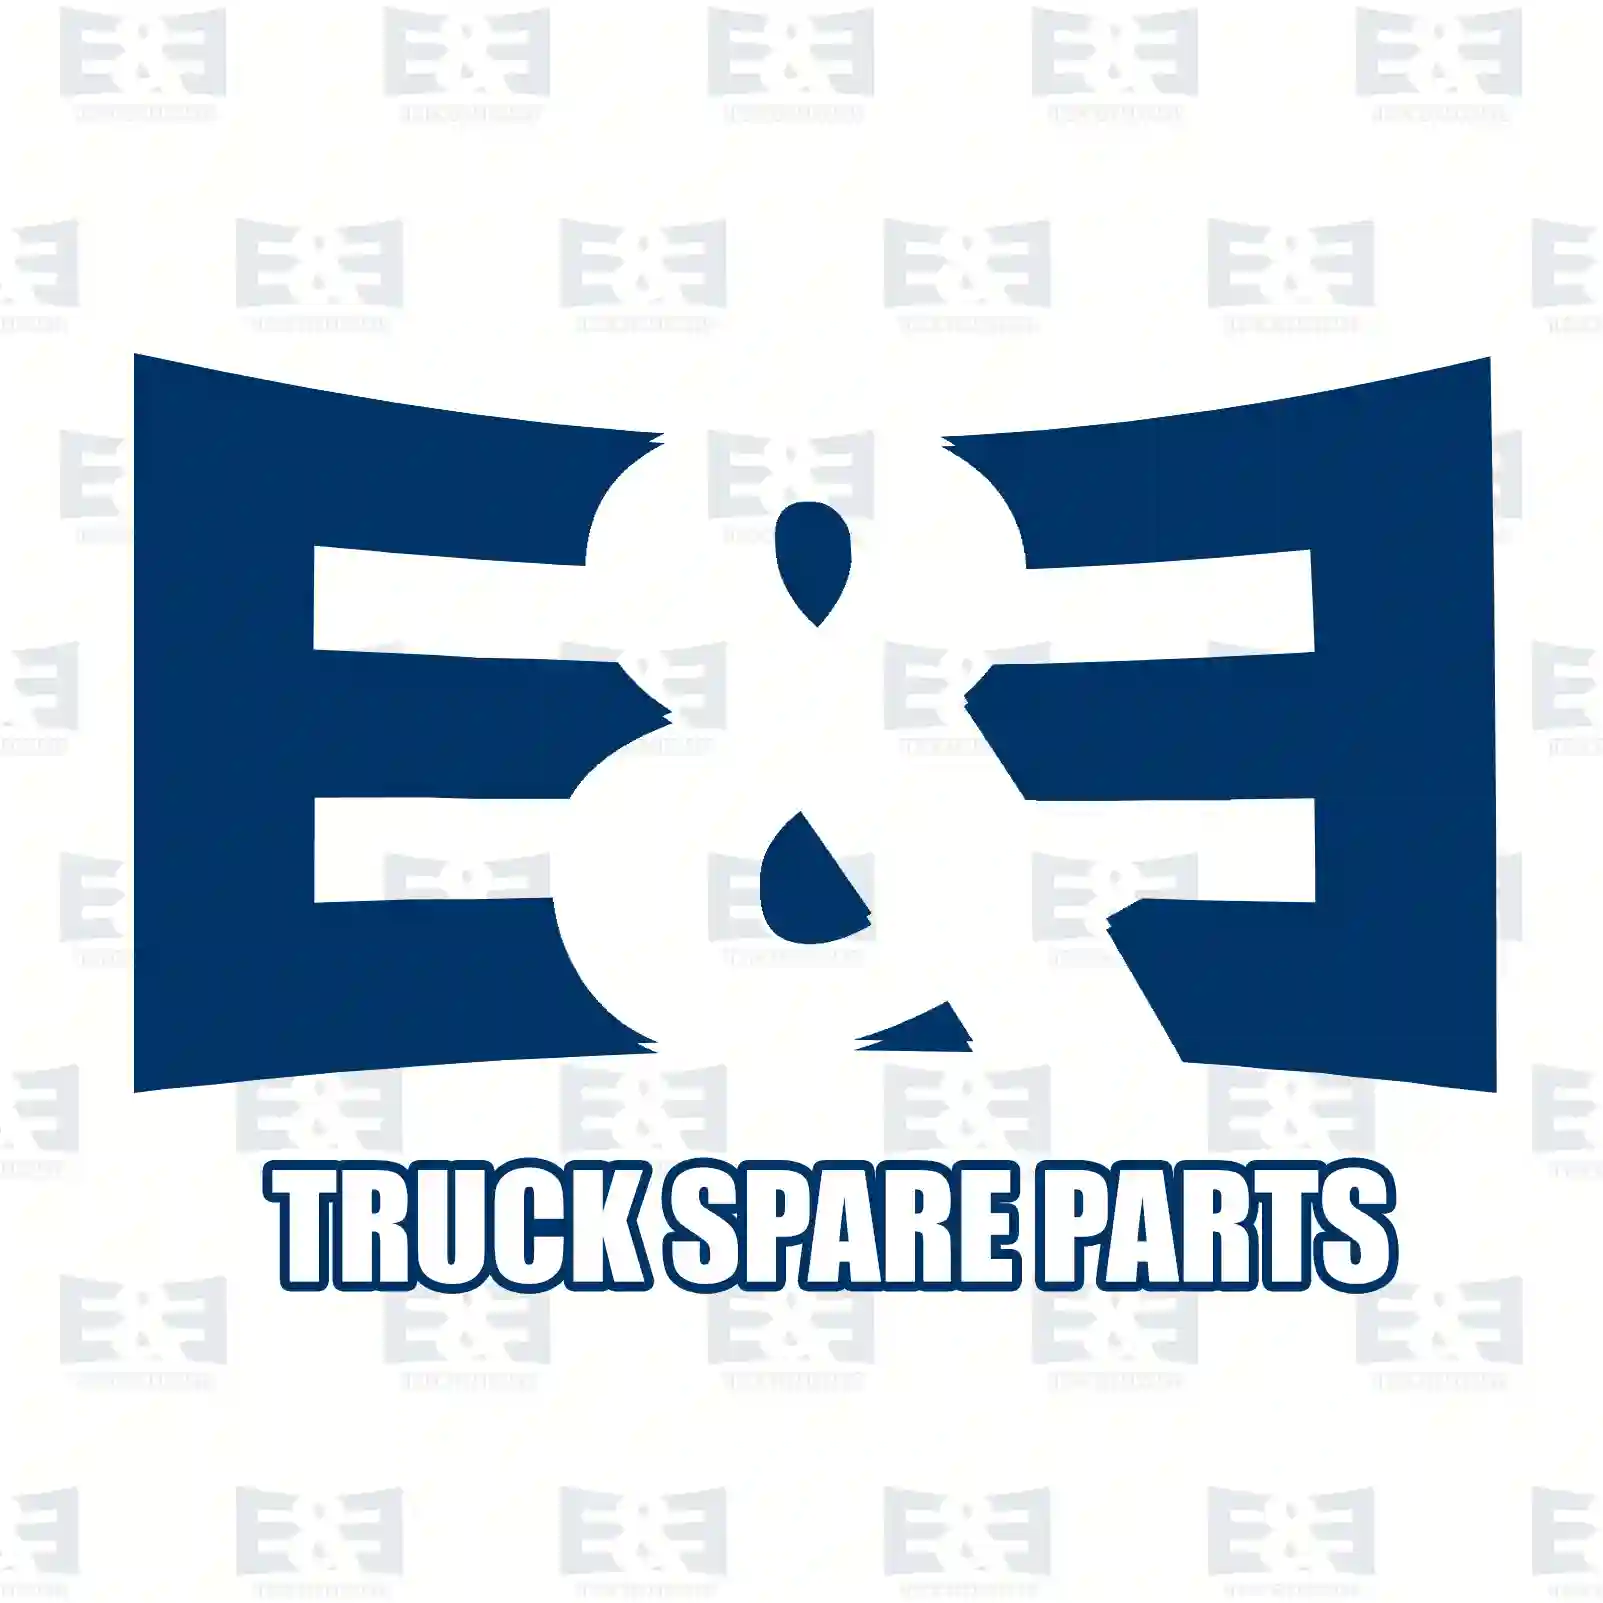 Engine mounting, 2E2207665, 9111351, 91166684, 4403351, 7700314476, 8200022596 ||  2E2207665 E&E Truck Spare Parts | Truck Spare Parts, Auotomotive Spare Parts Engine mounting, 2E2207665, 9111351, 91166684, 4403351, 7700314476, 8200022596 ||  2E2207665 E&E Truck Spare Parts | Truck Spare Parts, Auotomotive Spare Parts